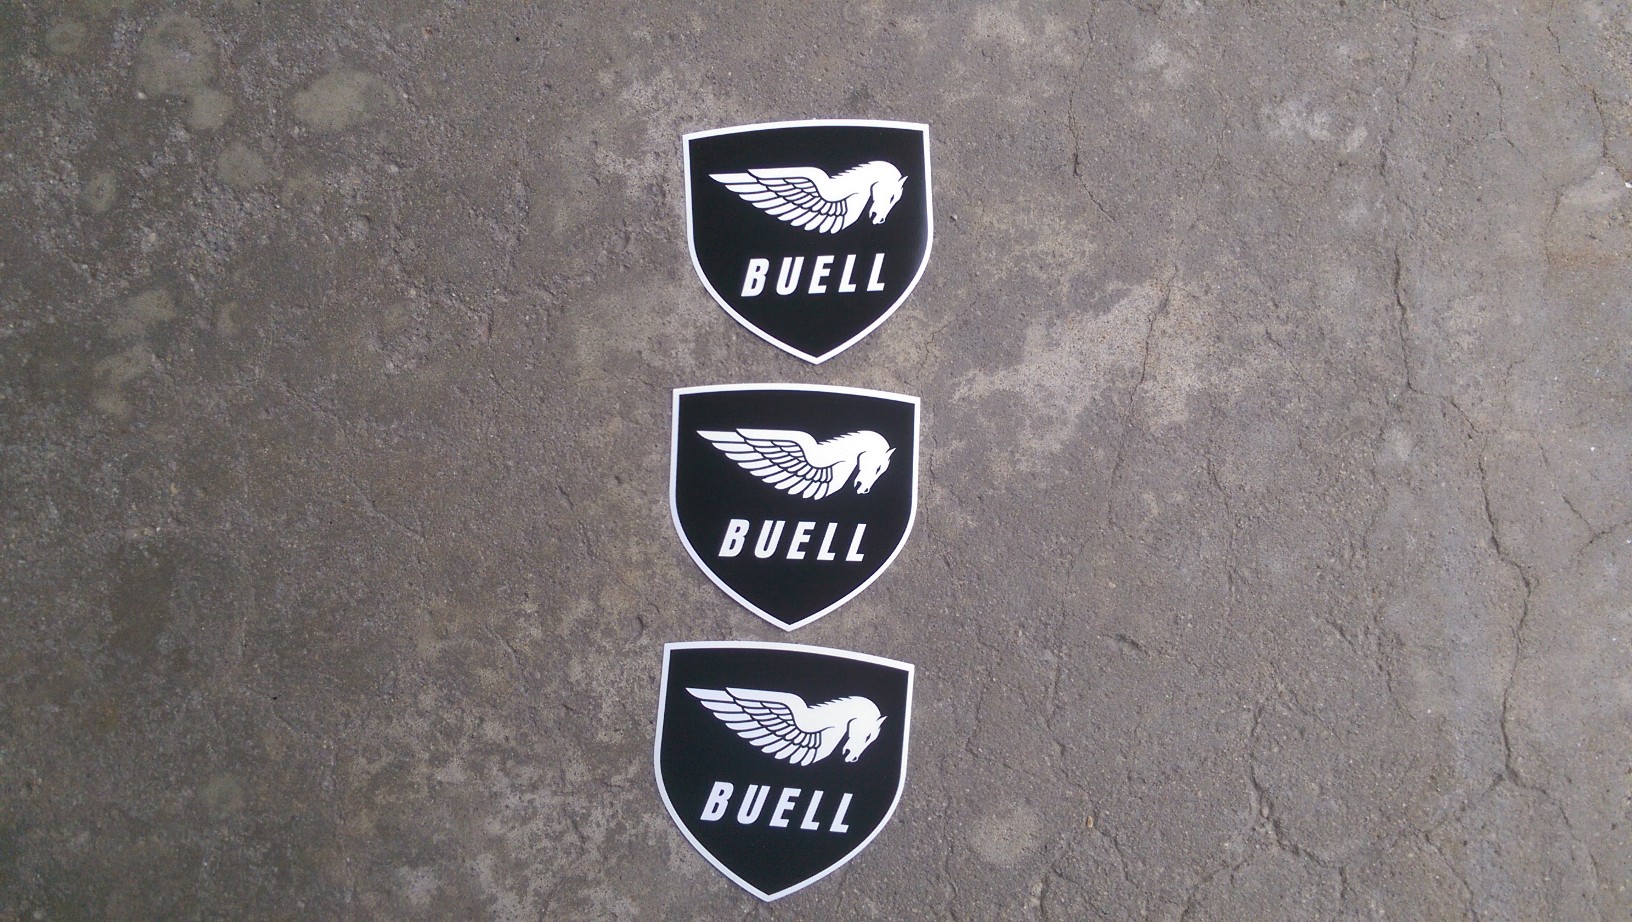 Buell vinyl stickers